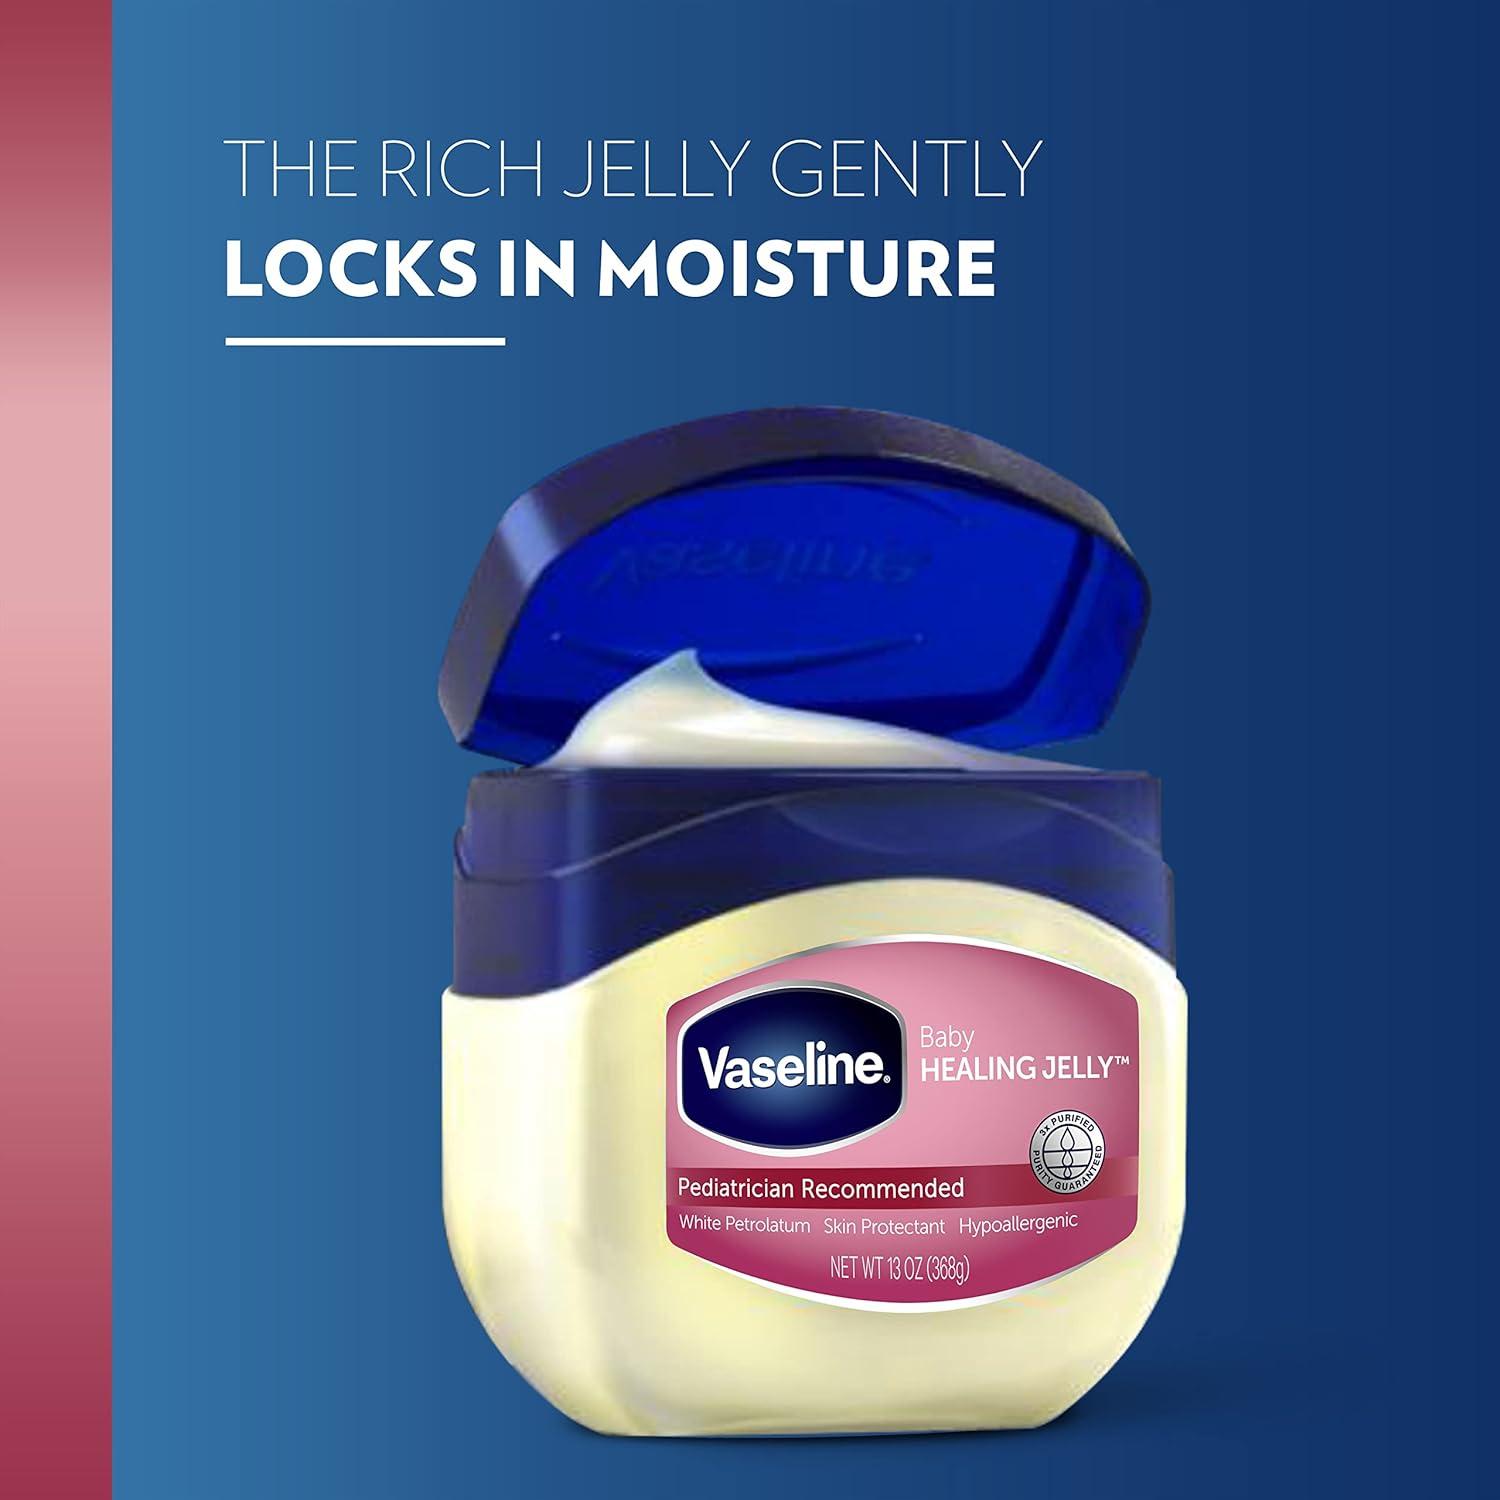 Vaseline 100 Pure Petroleum Jelly Skin Protectant 50ml — Shopping